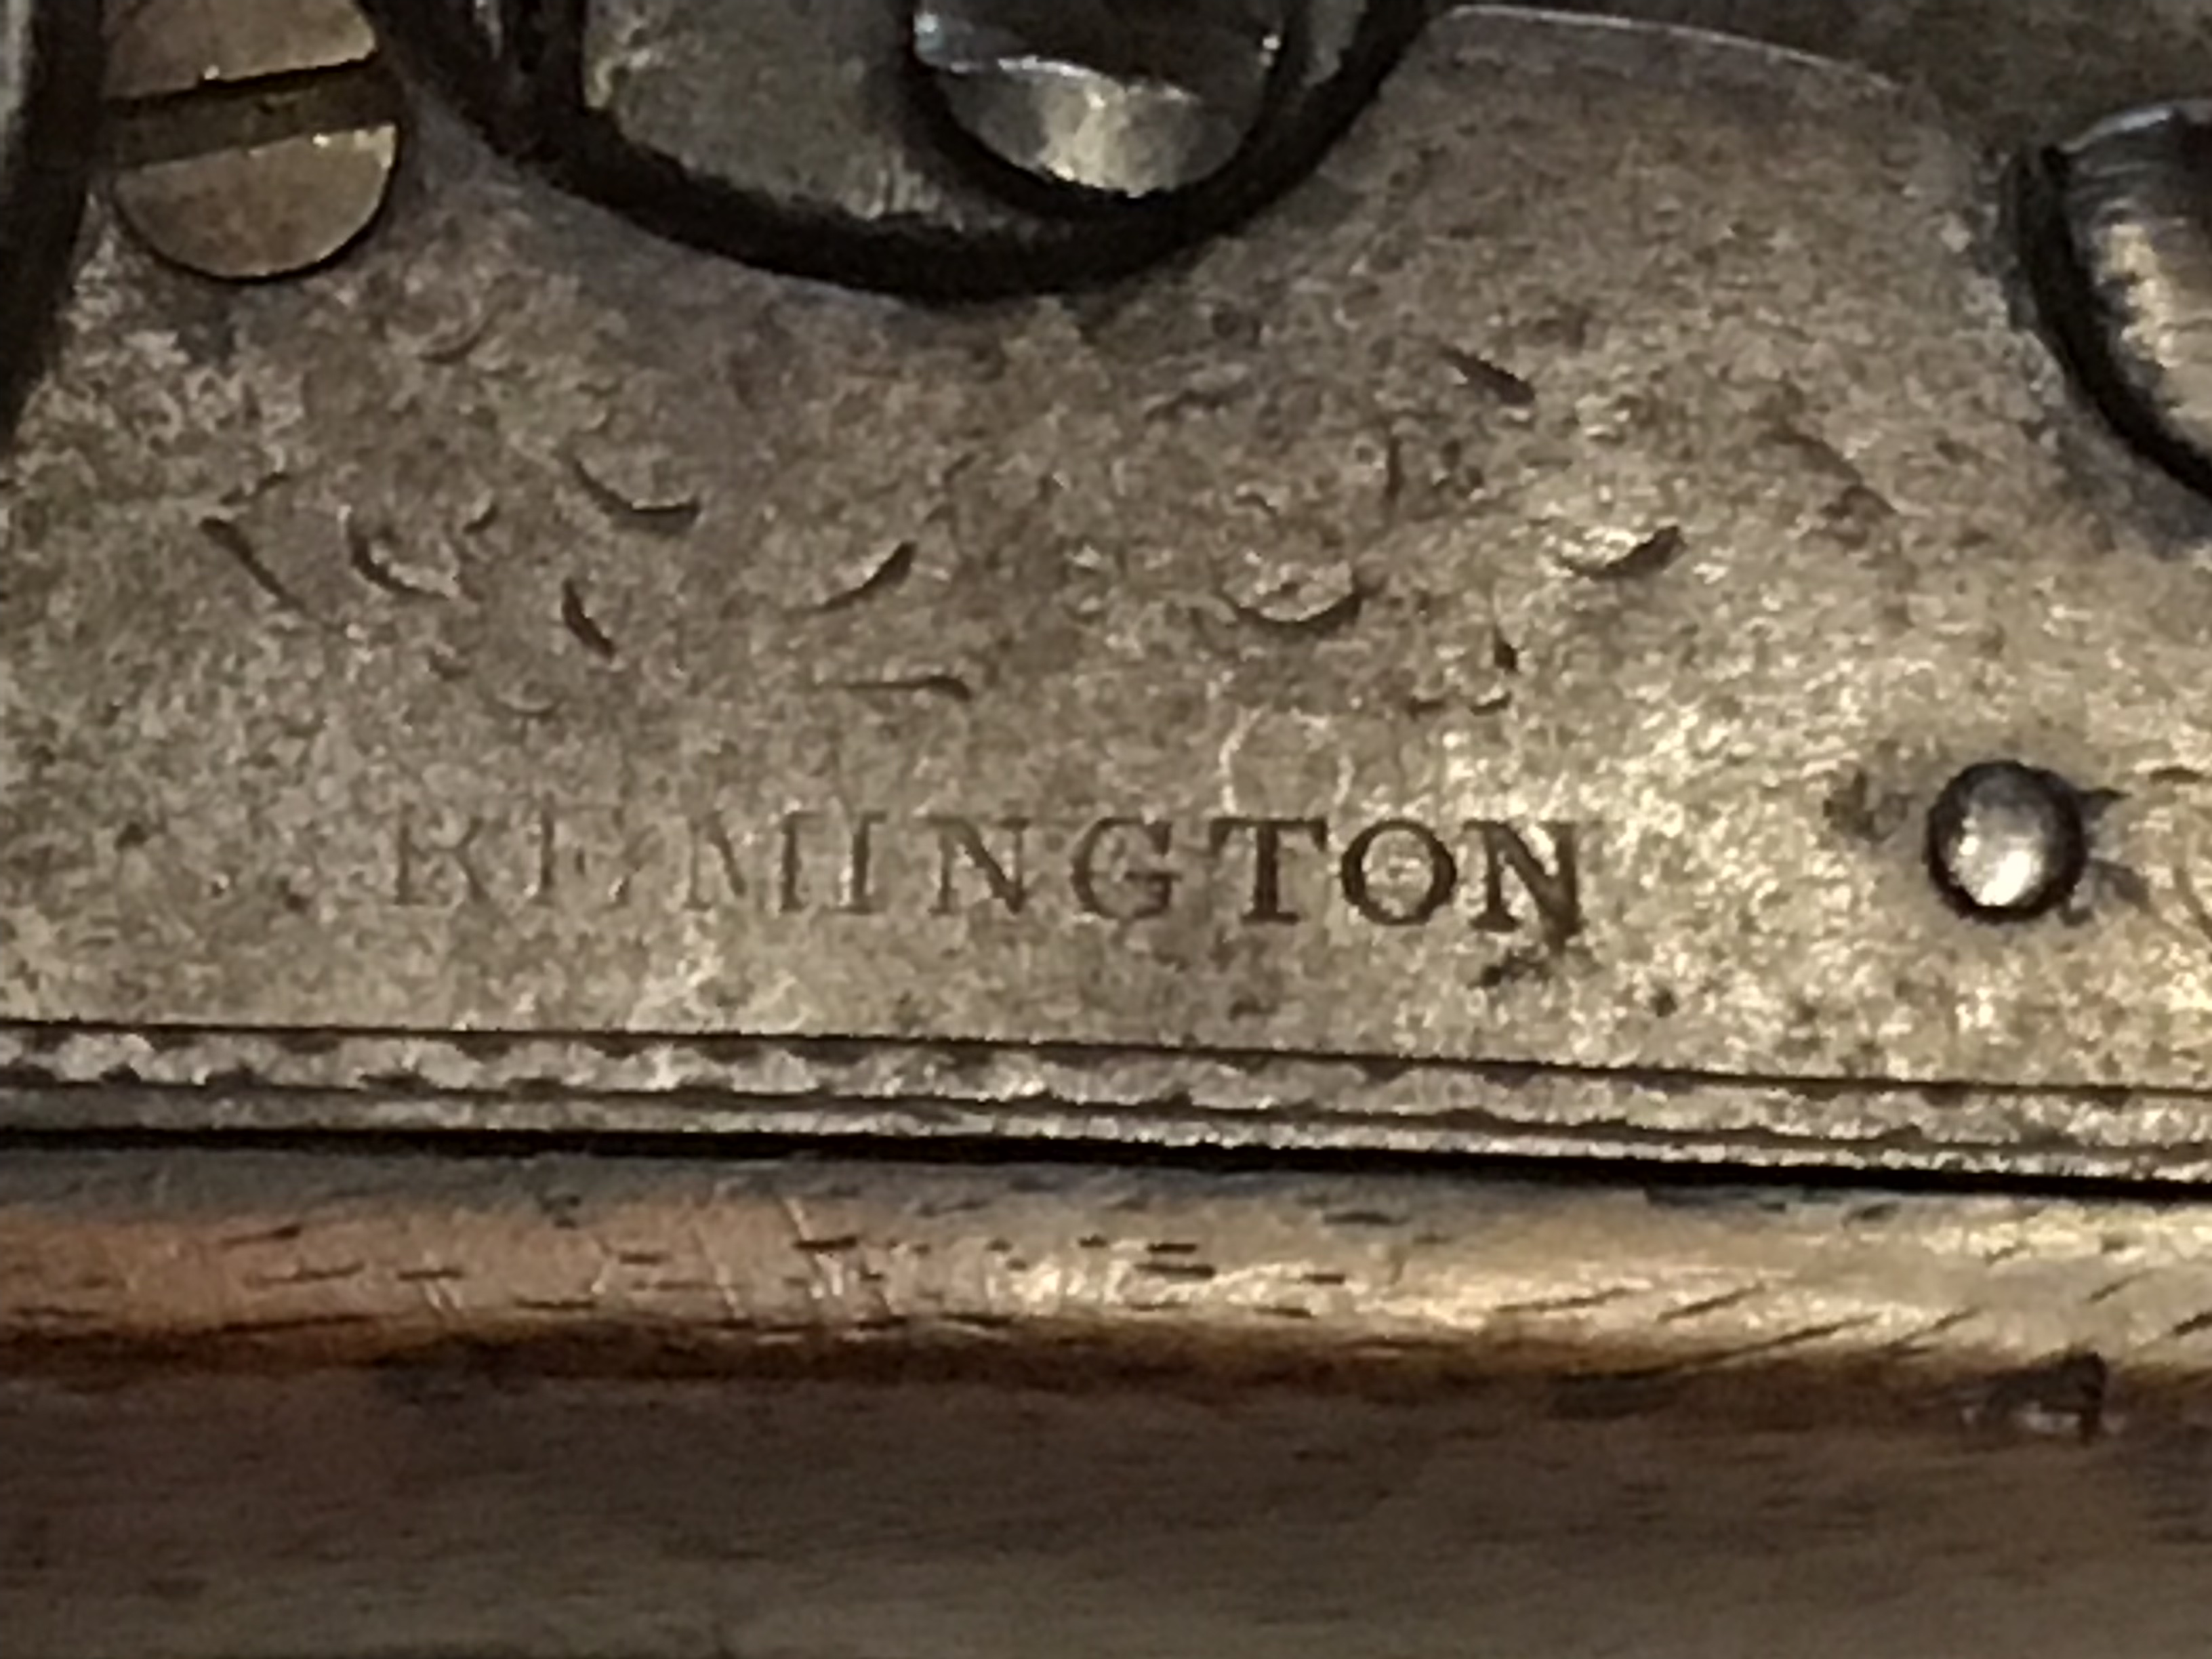 remington on lock